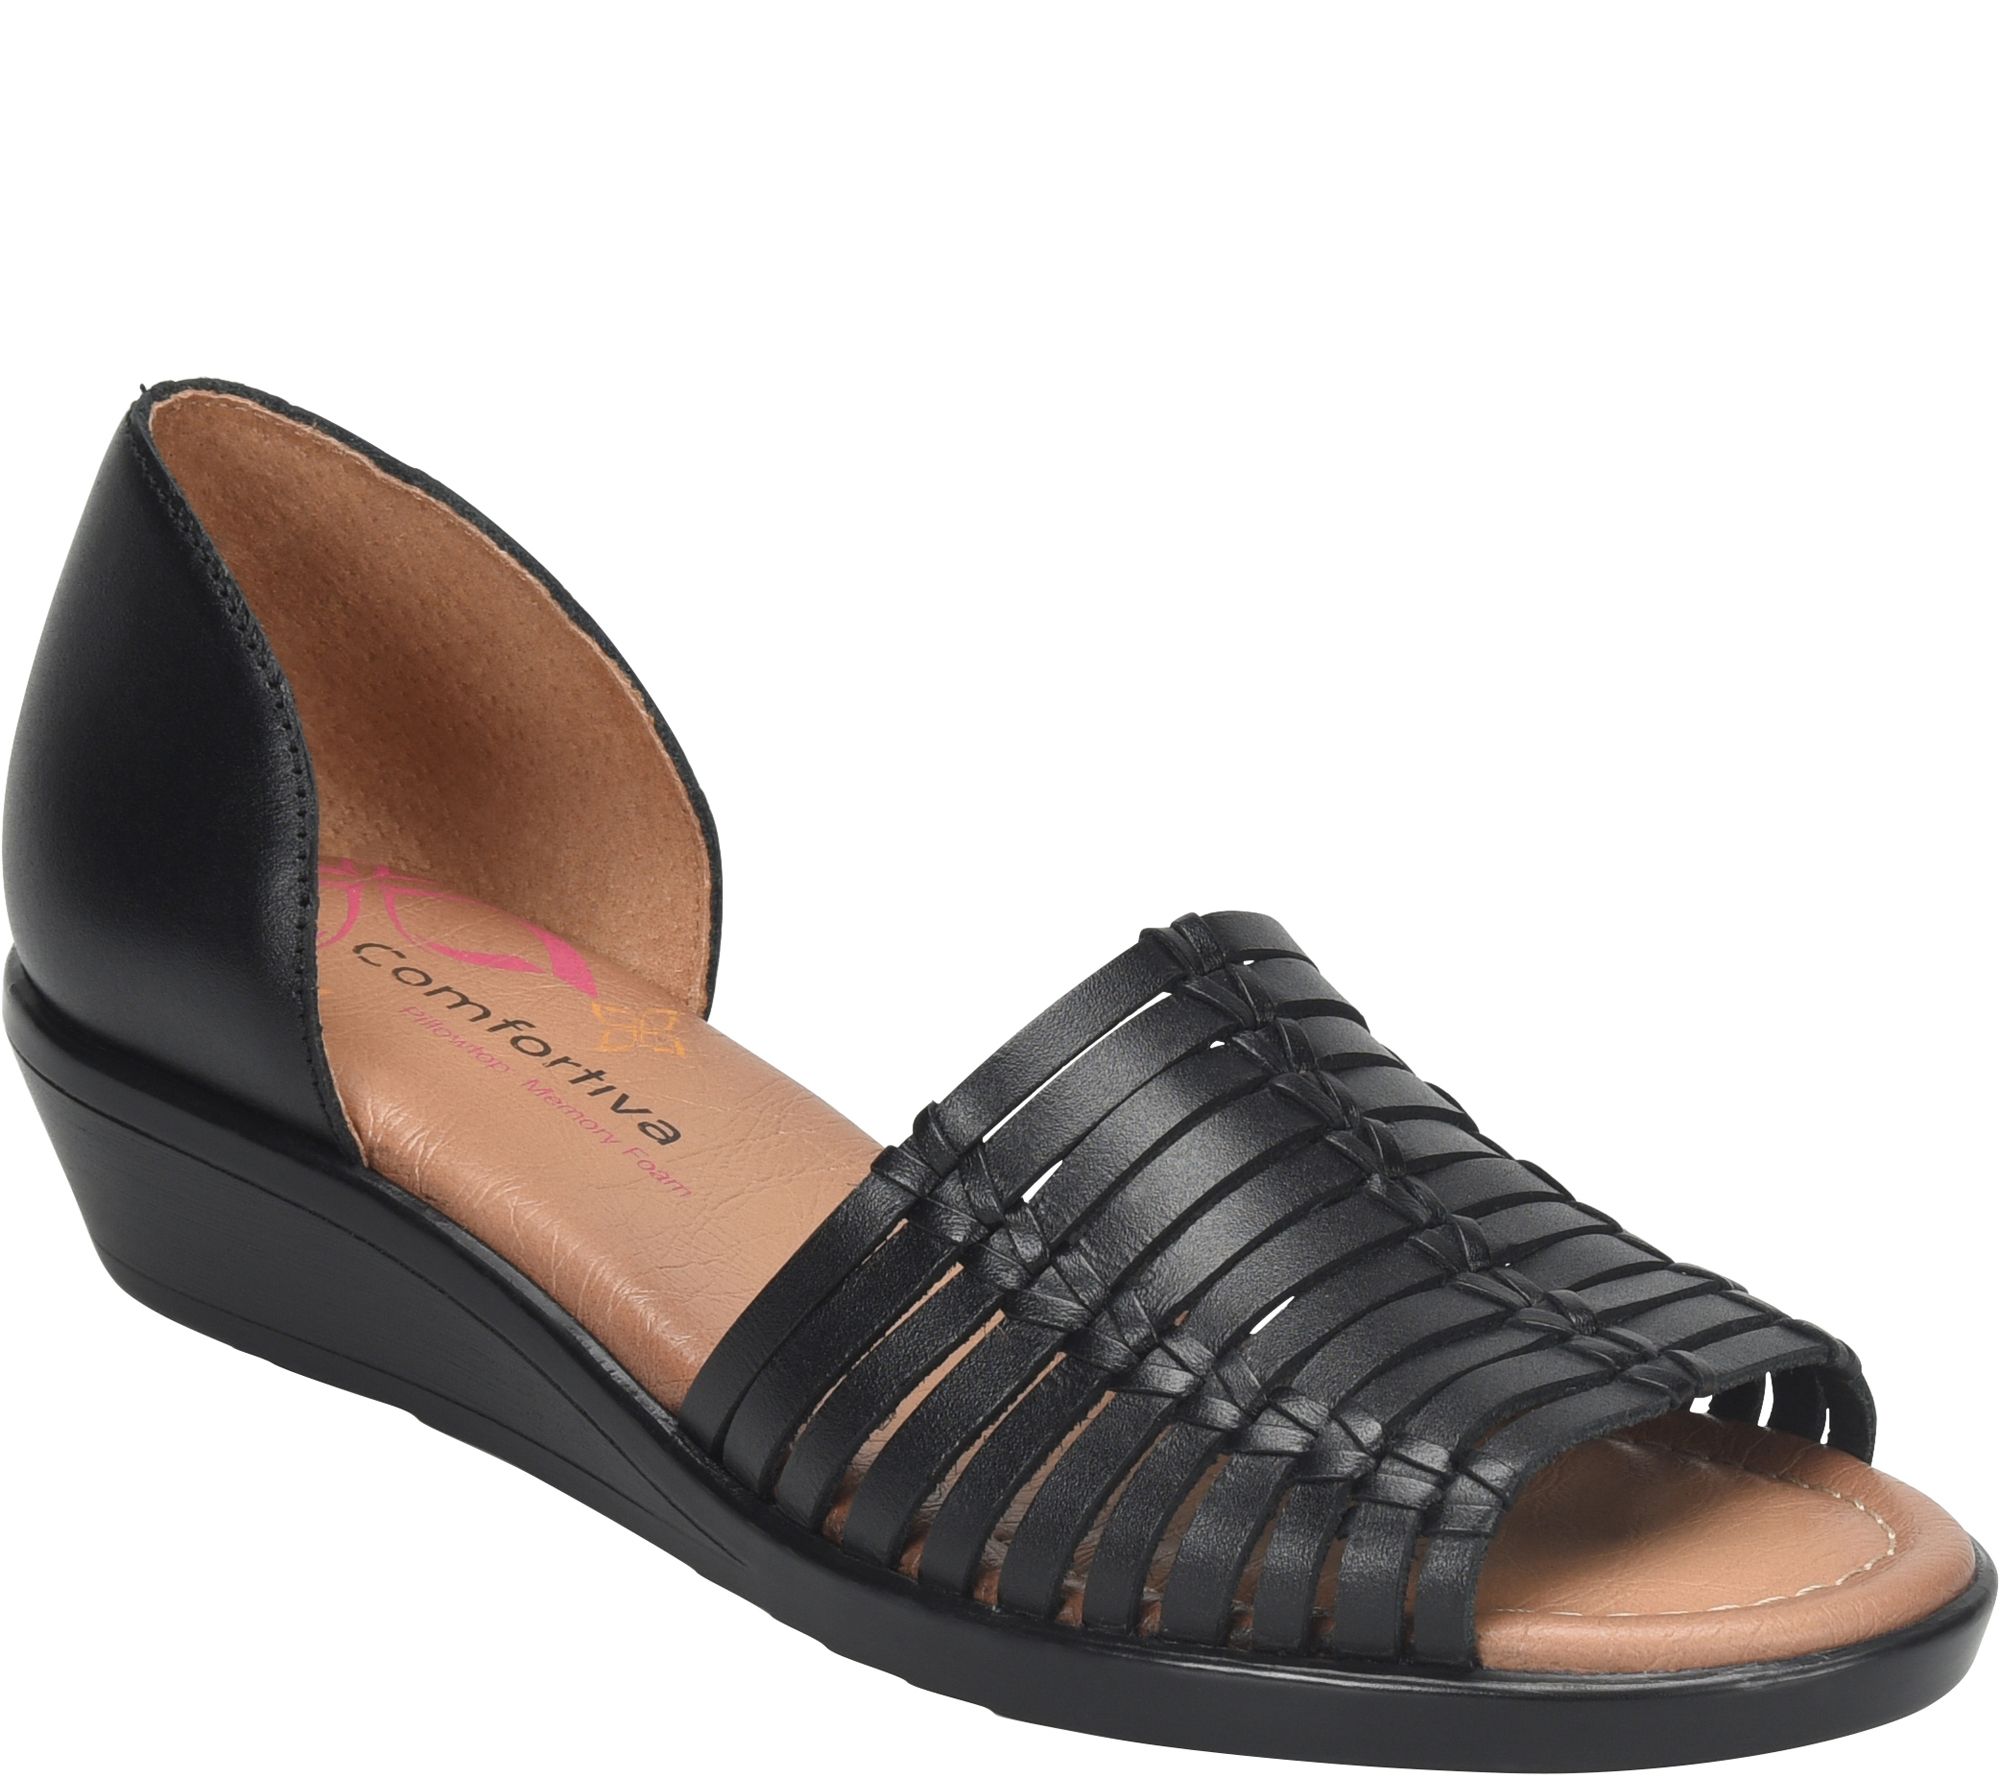 Comfortiva Leather Huarache Sandals - Fayann - QVC.com